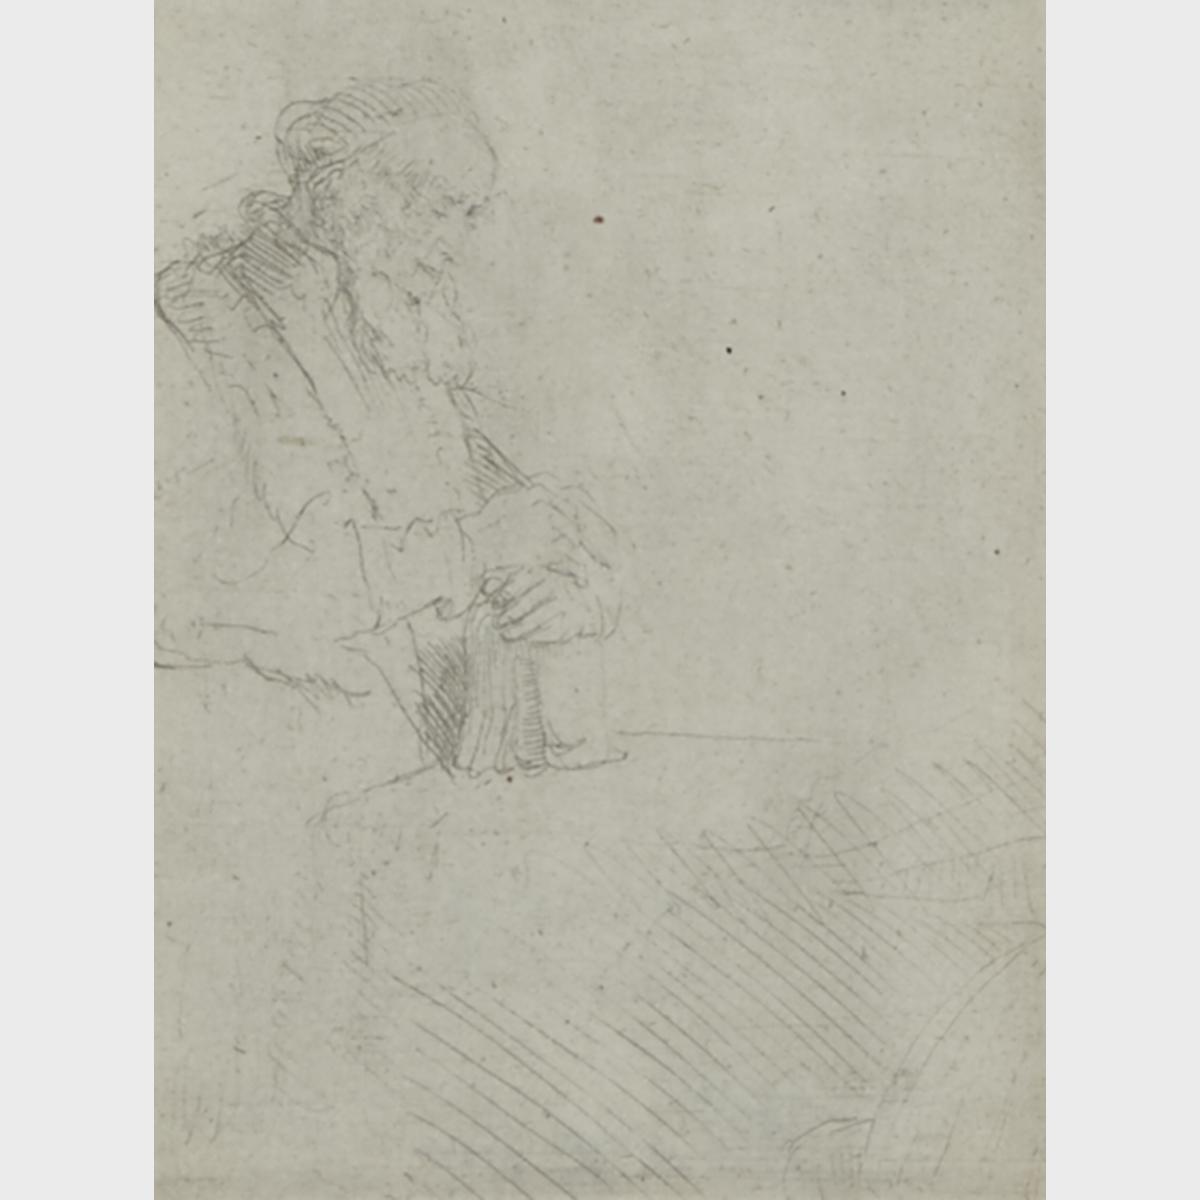 Rembrandt Van Rijn (1606-1669)